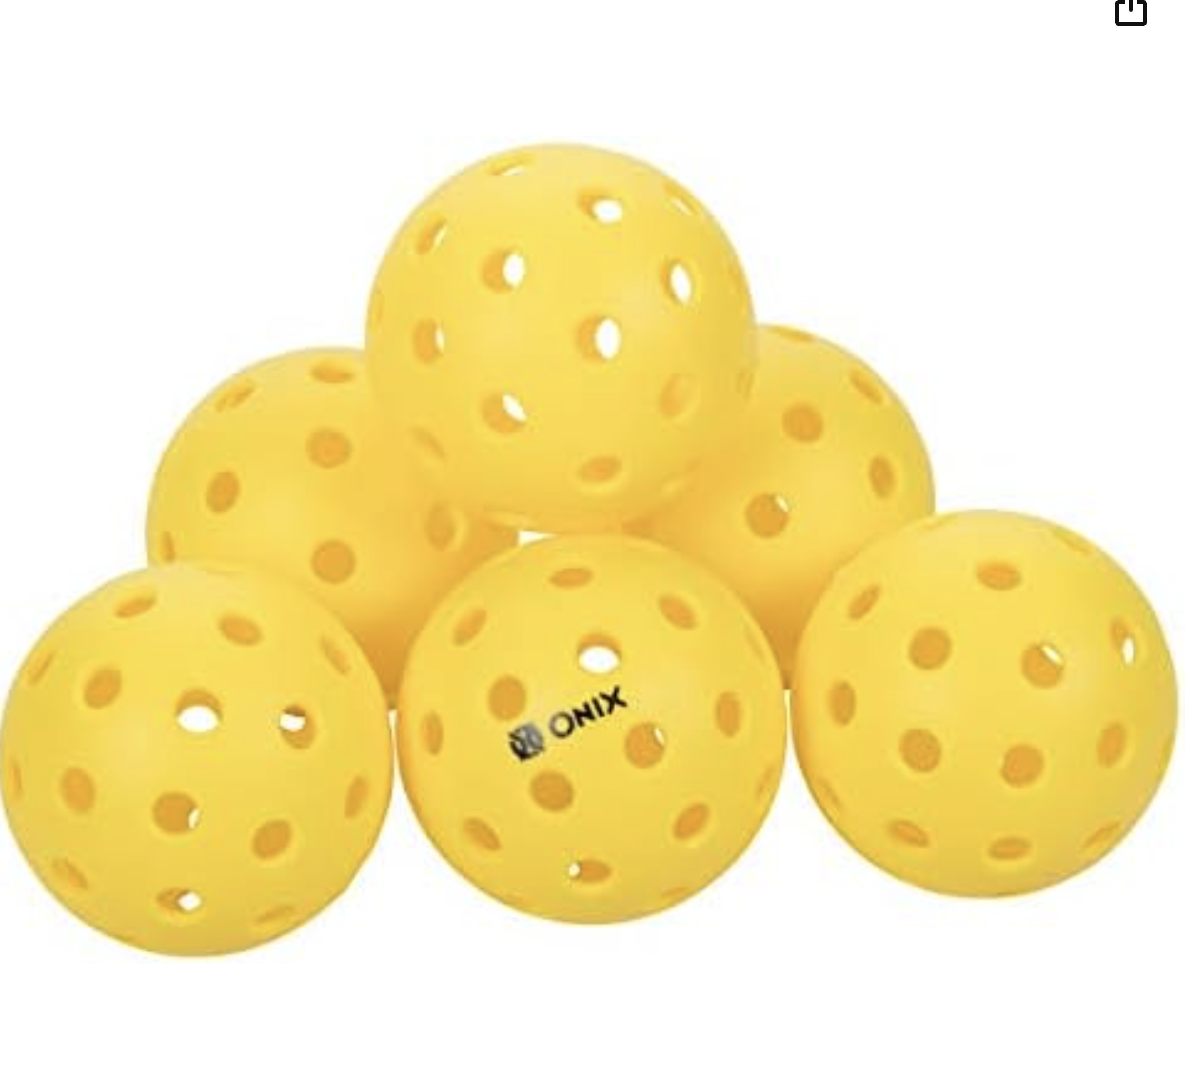 Pickleball balls